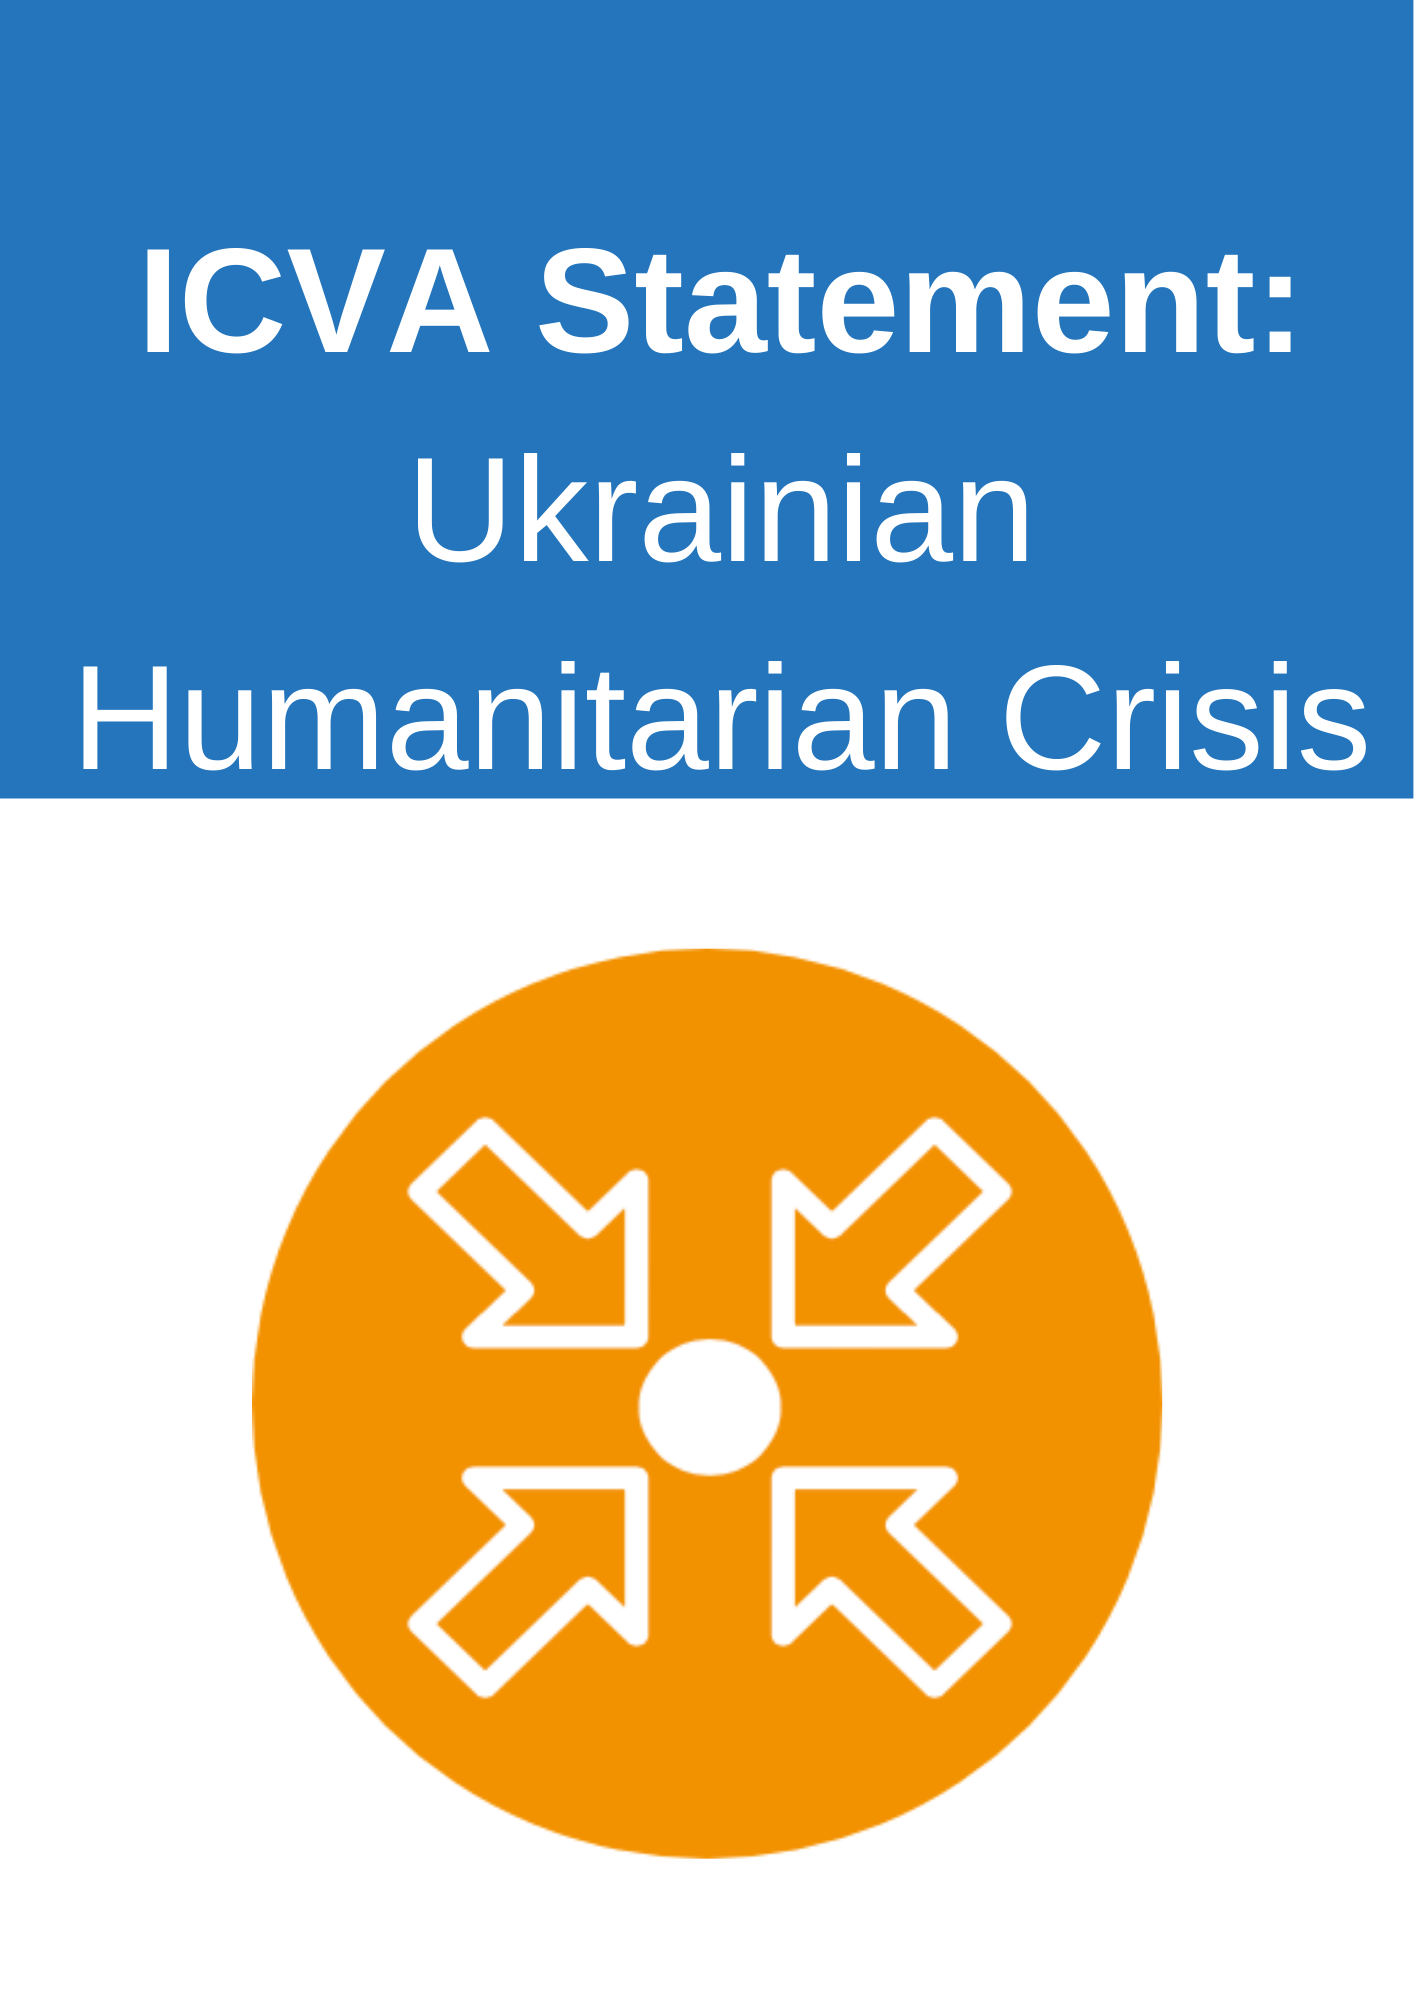 ICVA Statement on the Ukrainian Humanitarian Crisis